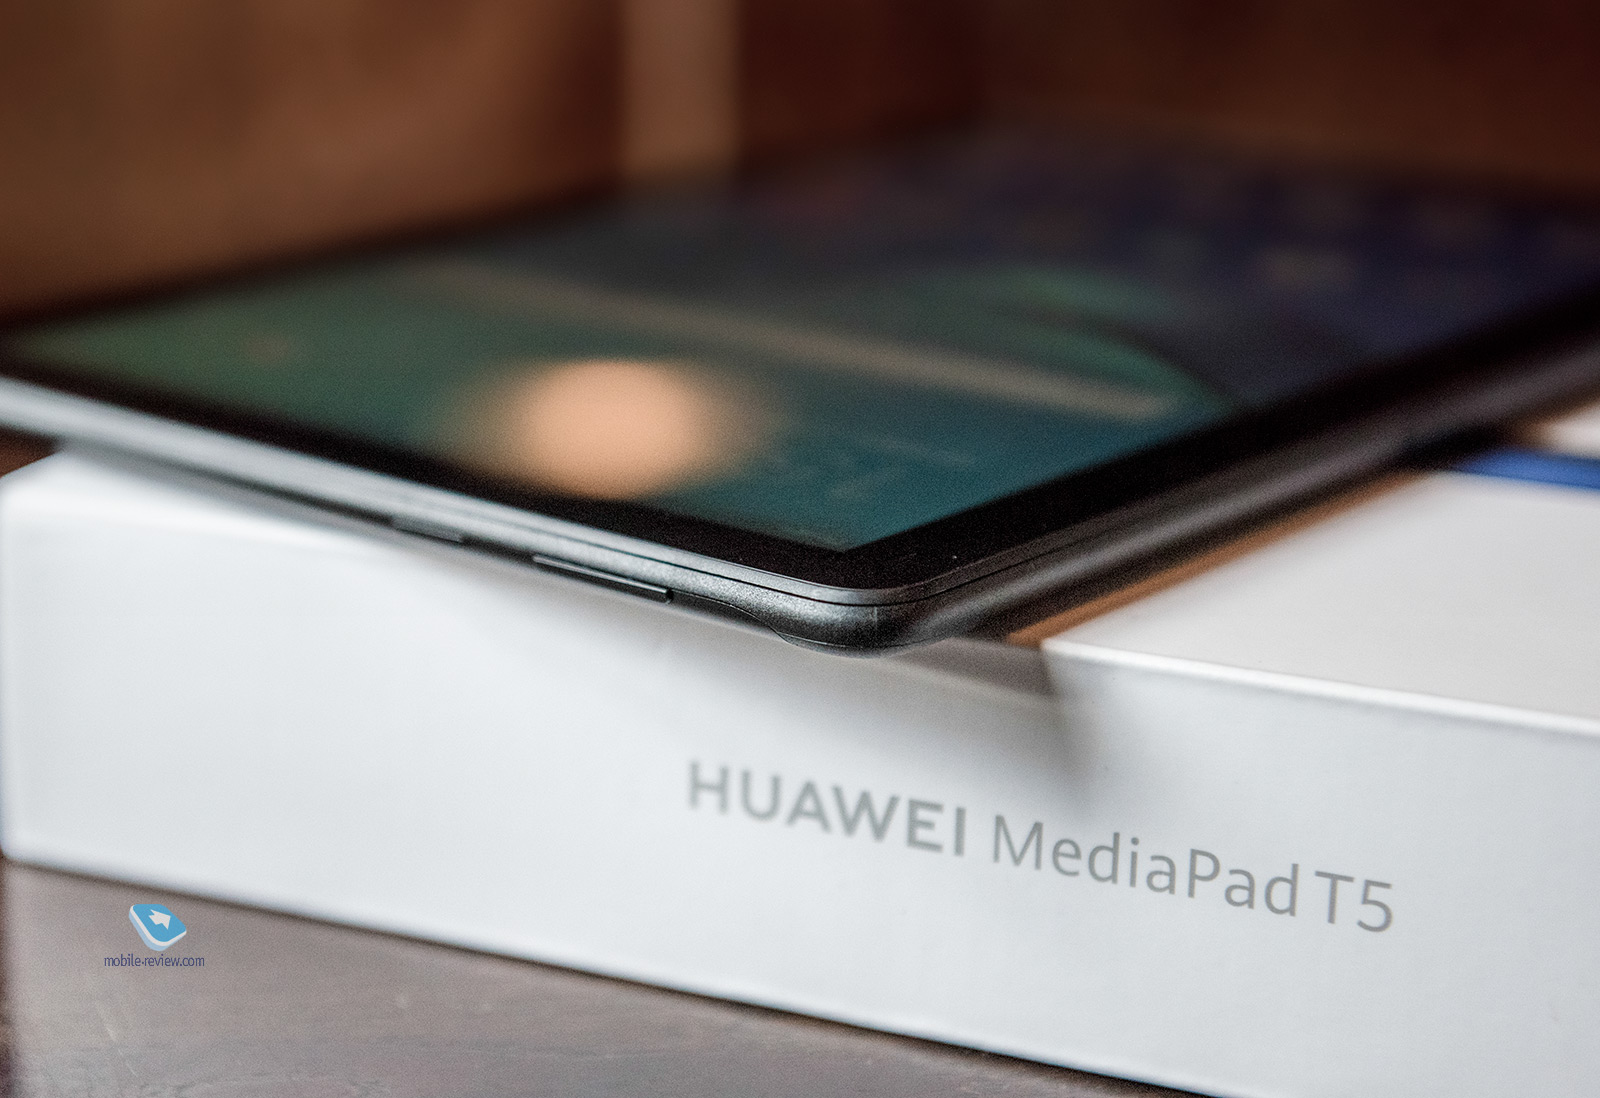   Huawei MediaPad T5